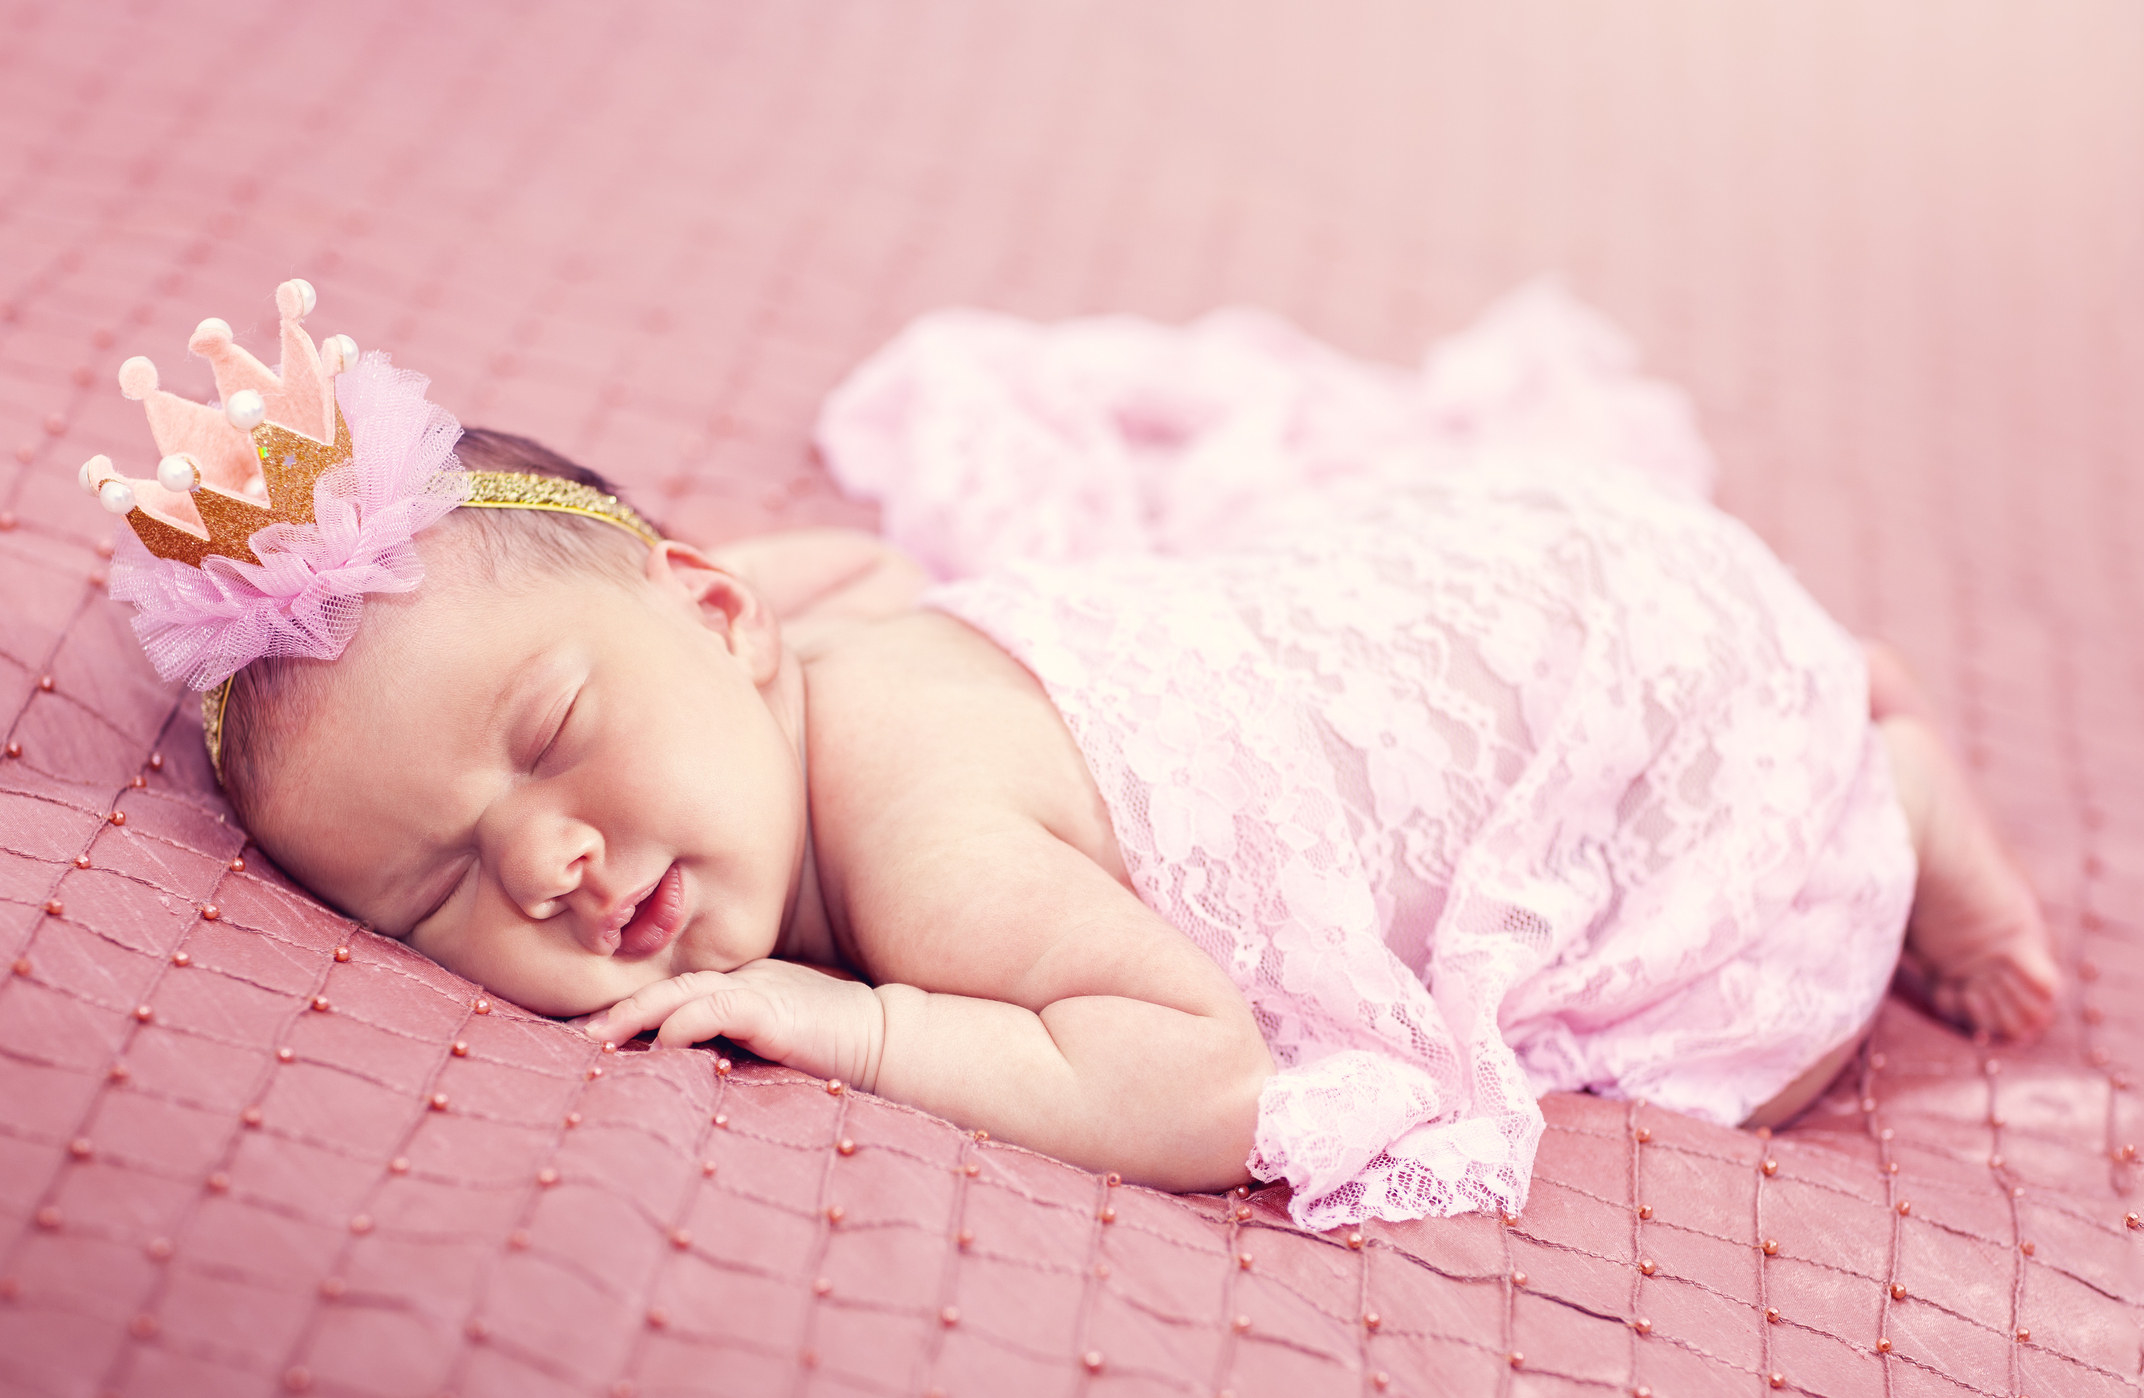 A baby dressed like a princess sleeping on a bed